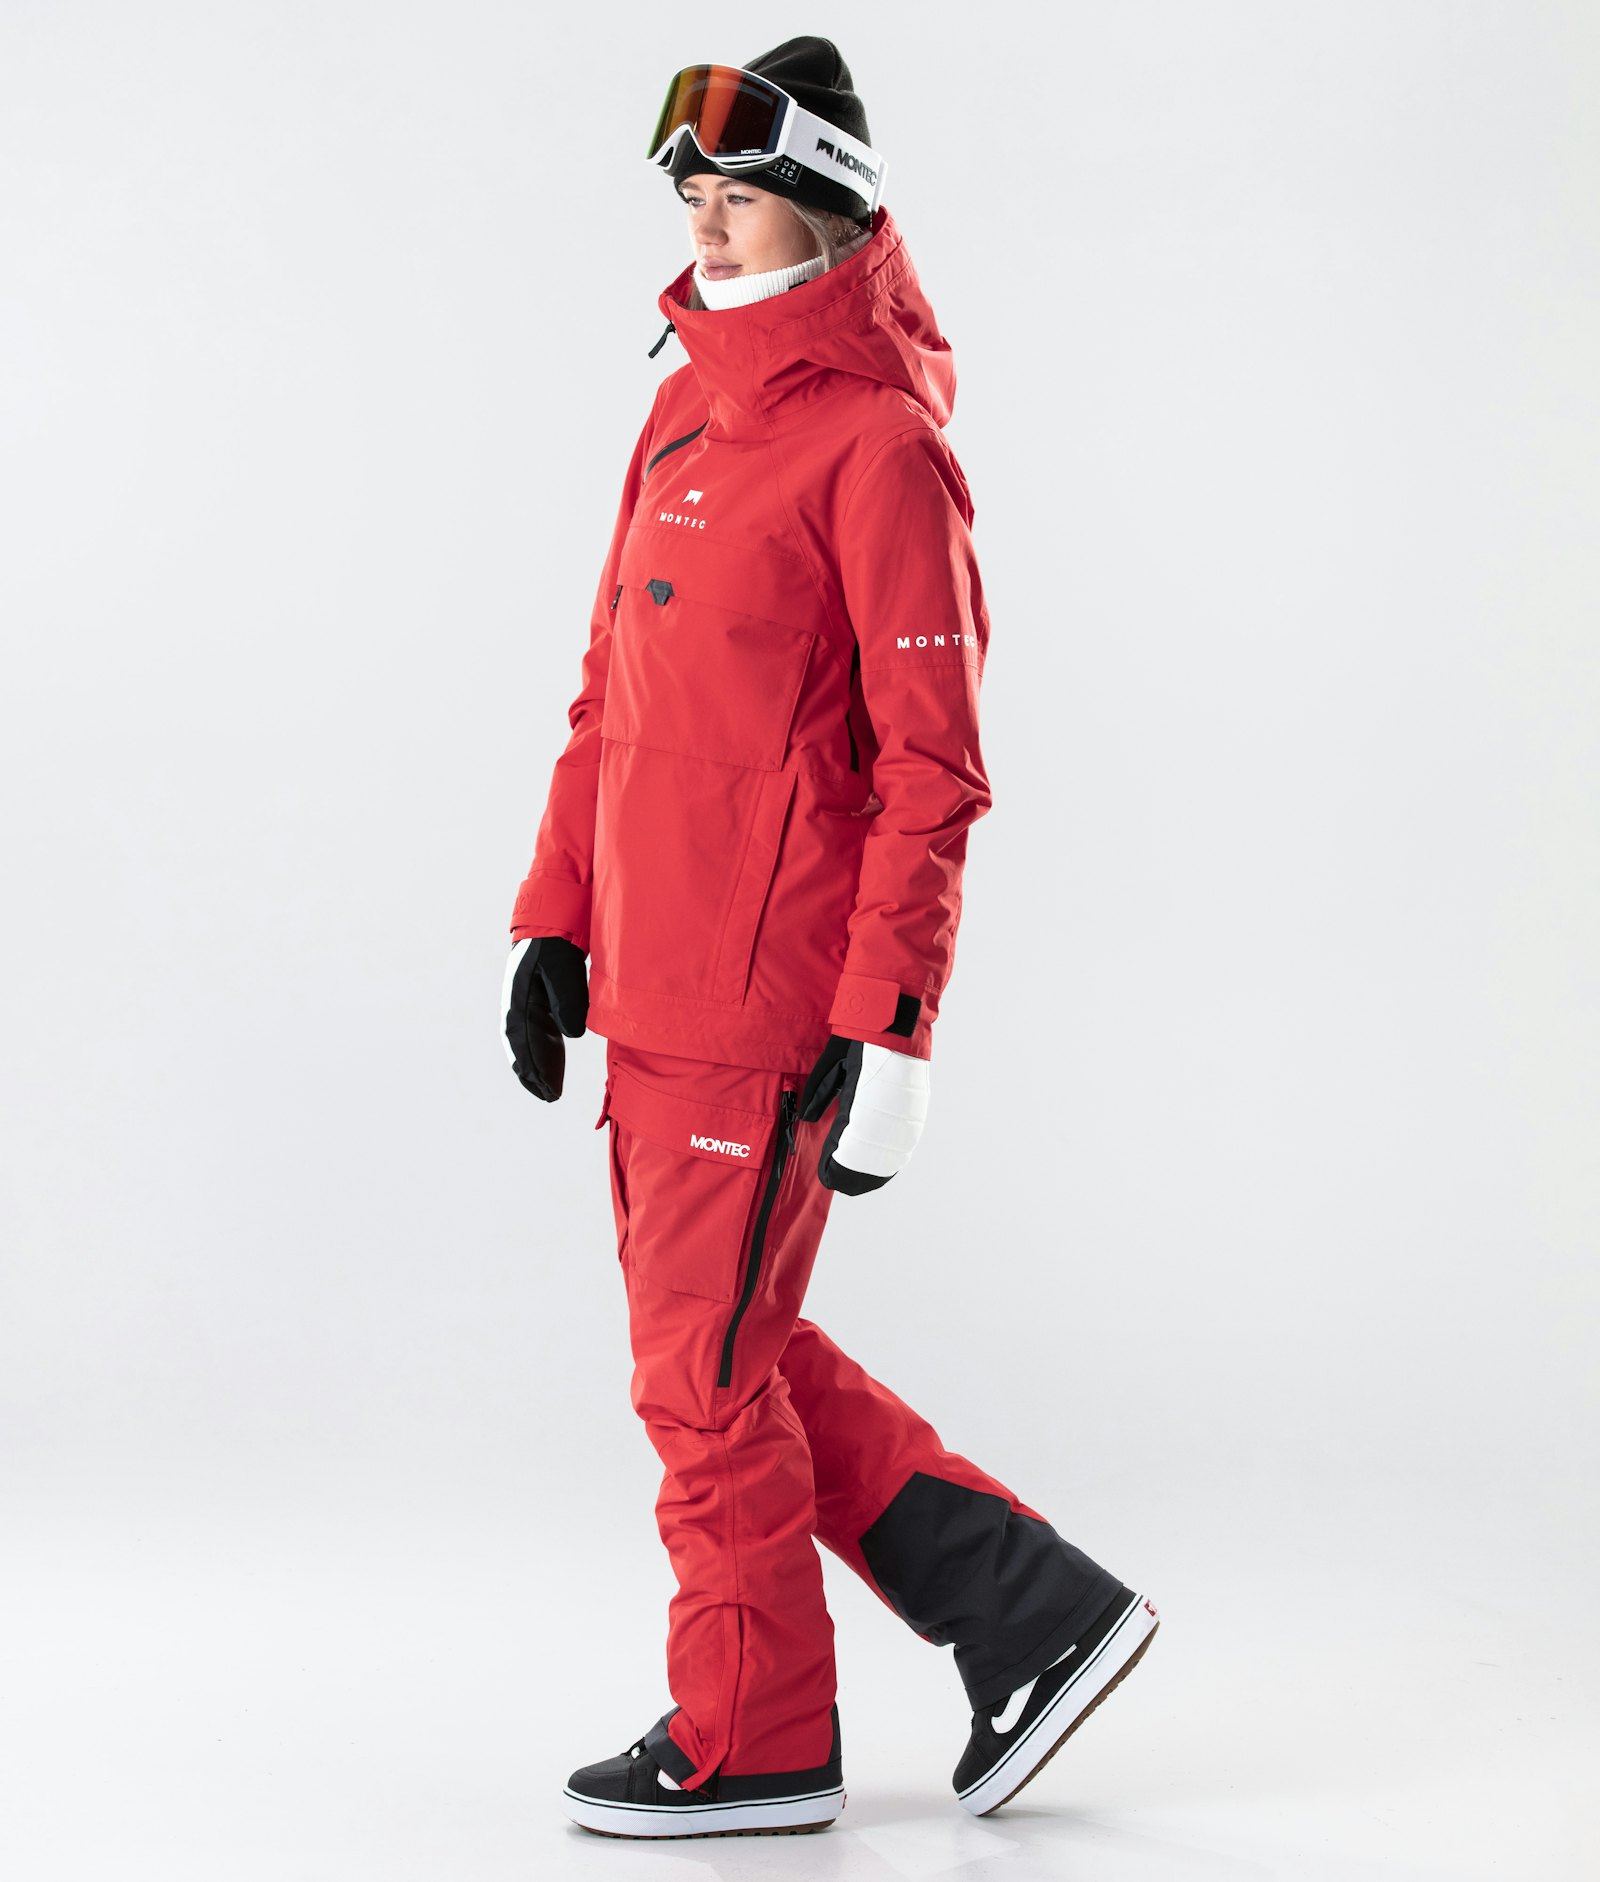 Dune W 2020 Snowboard Jacket Women Red